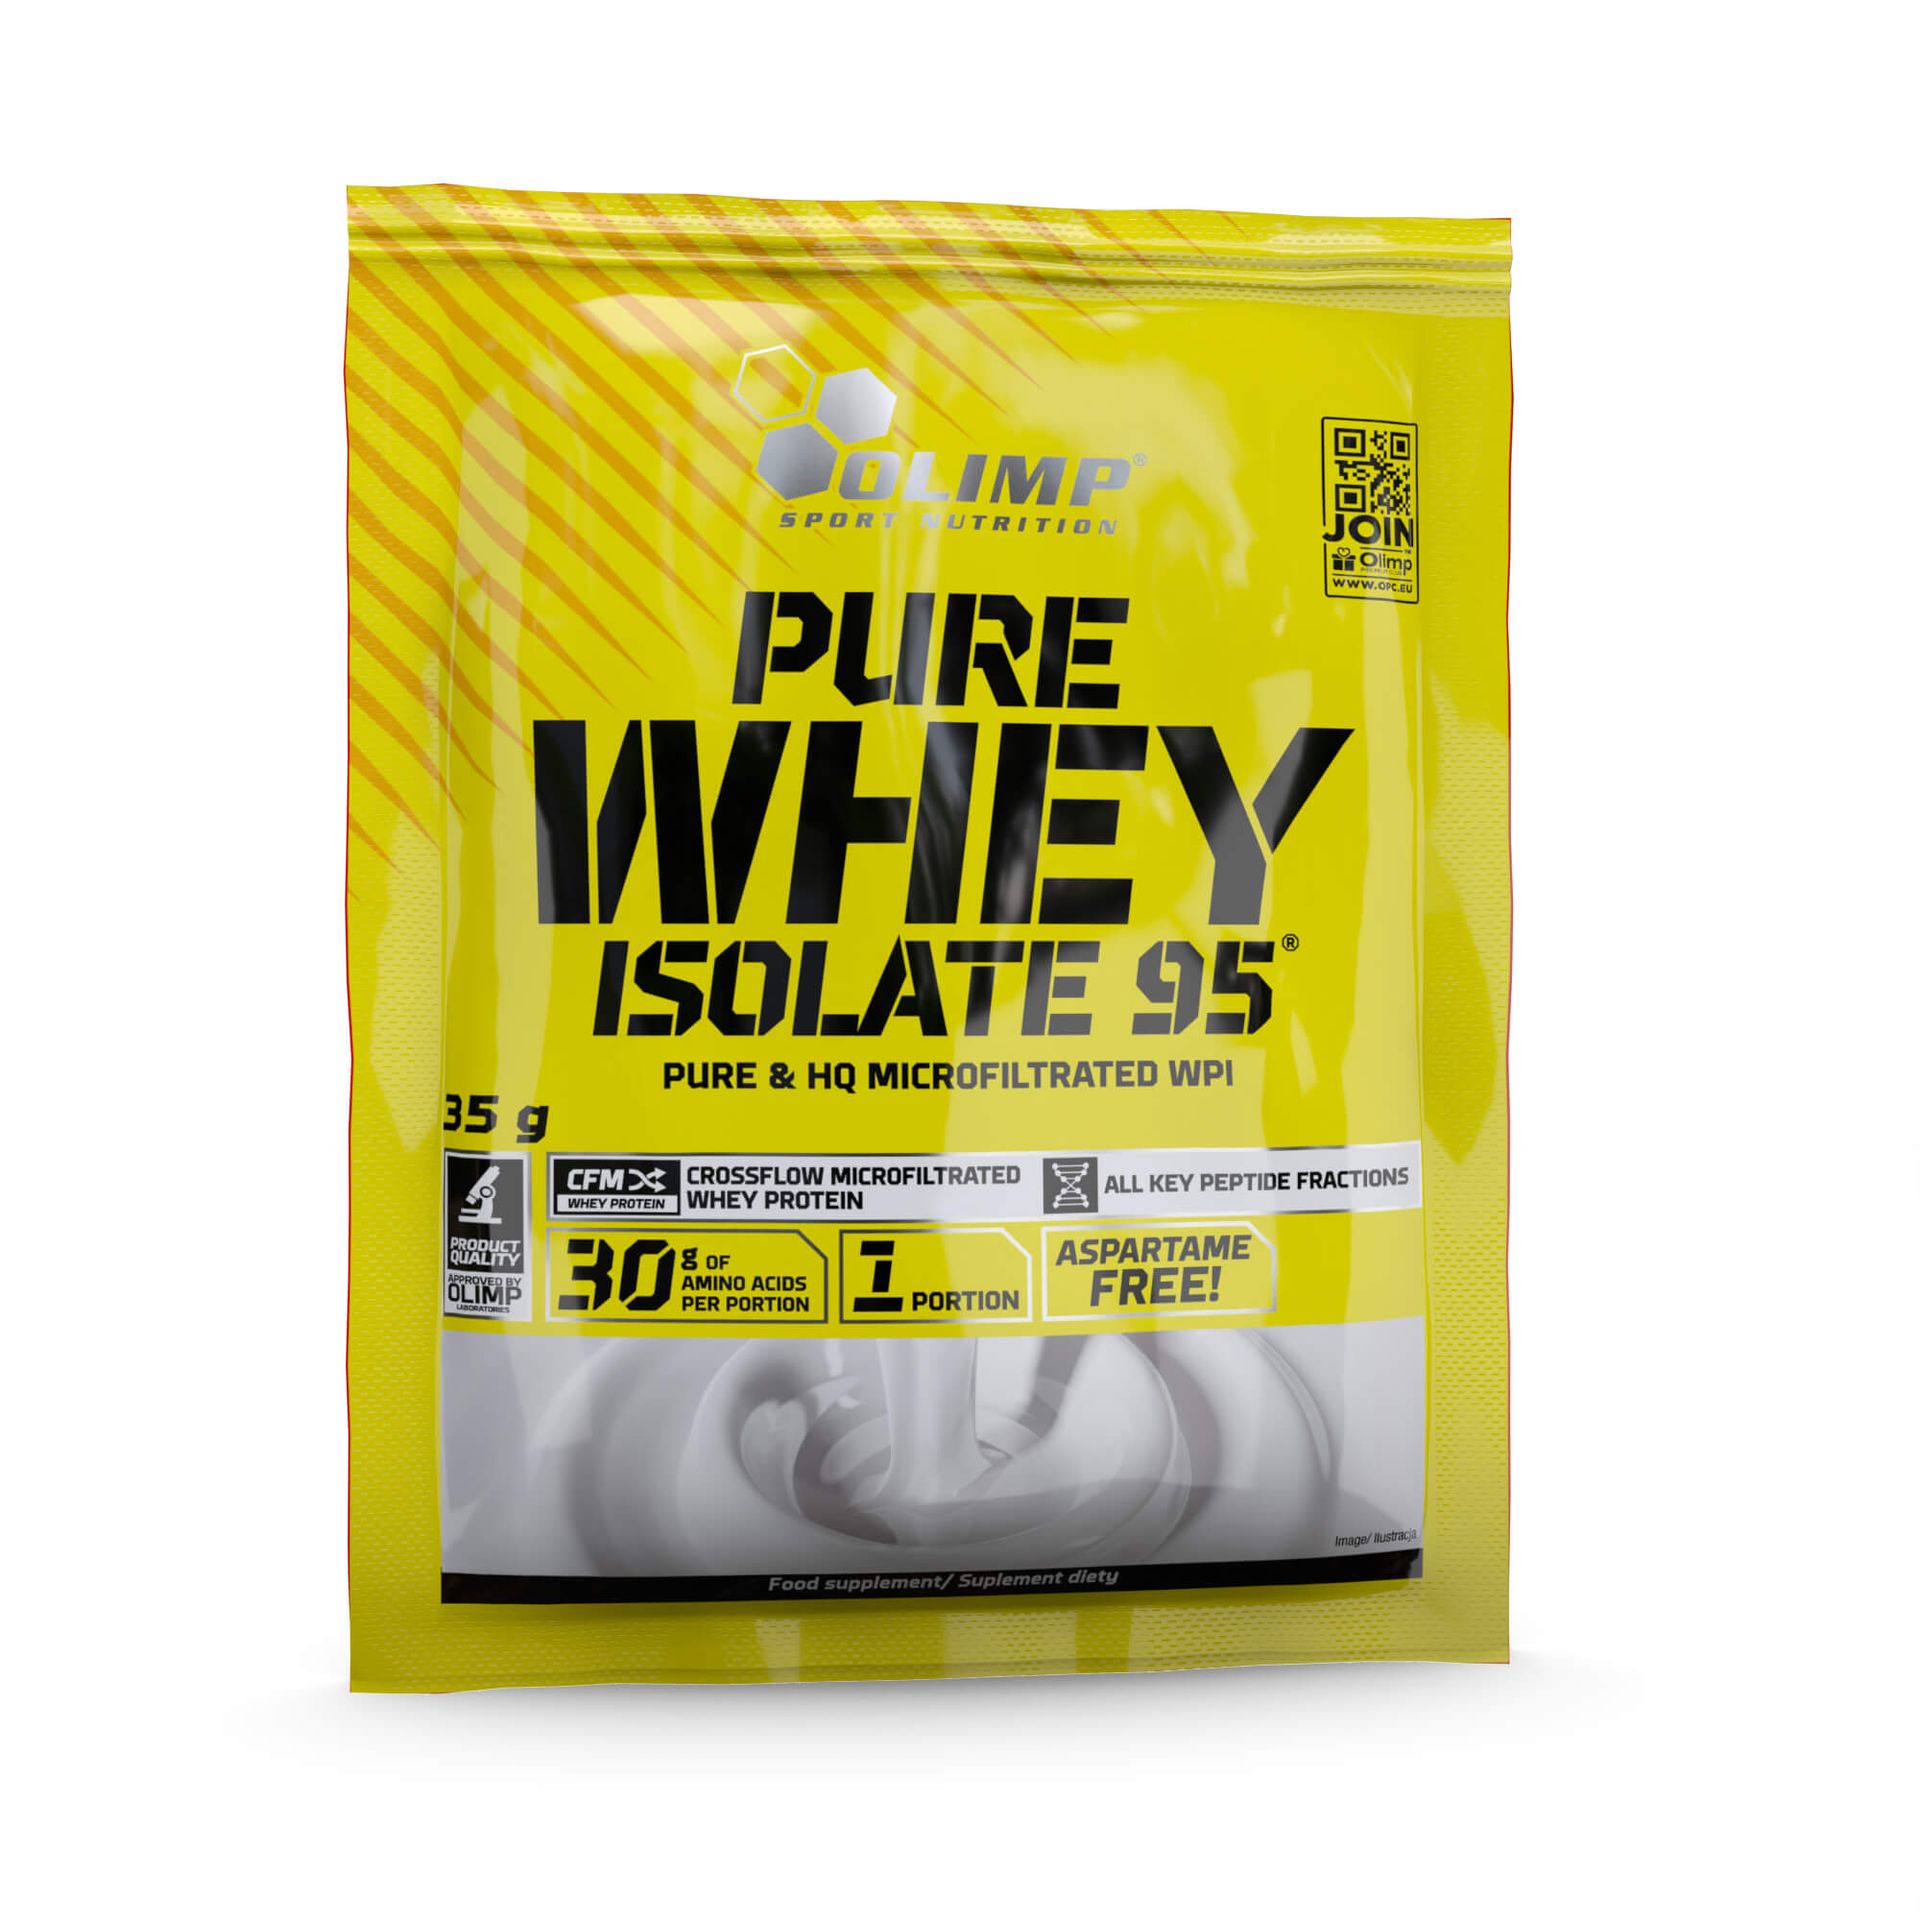 Olimp Pure Whey Isolate 95® - 35 g-Vanilla Ice Cream